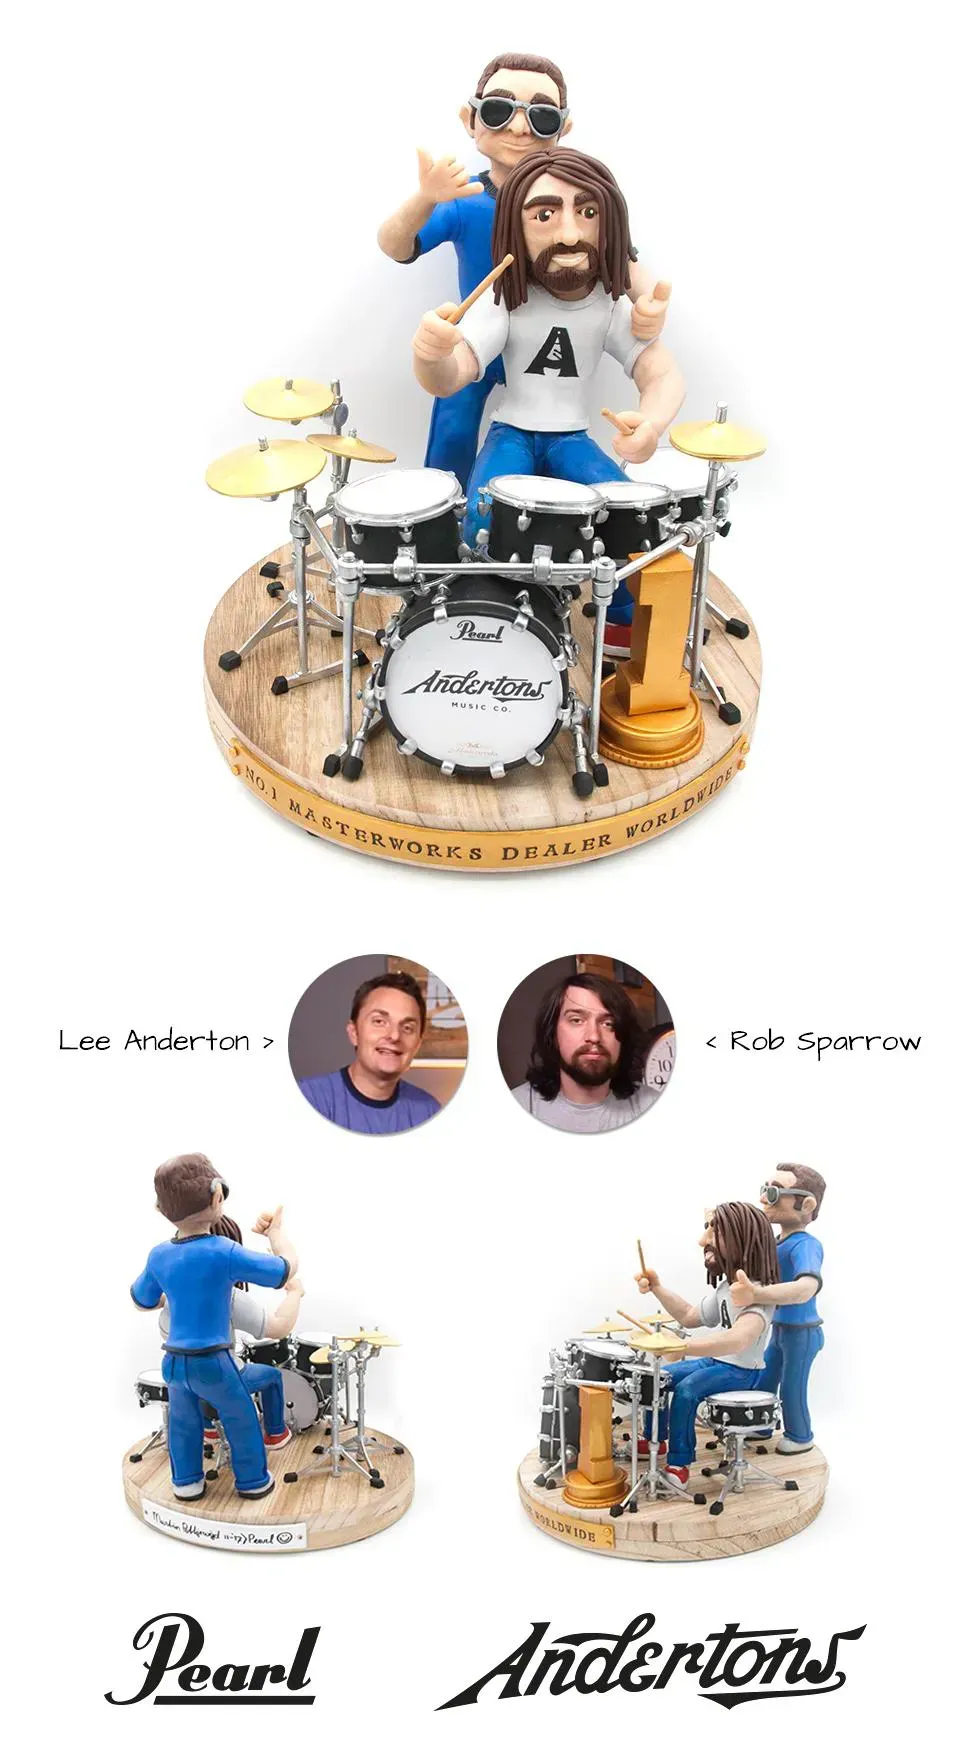 Award best Pearl Drums Masterworks dealer worldwide